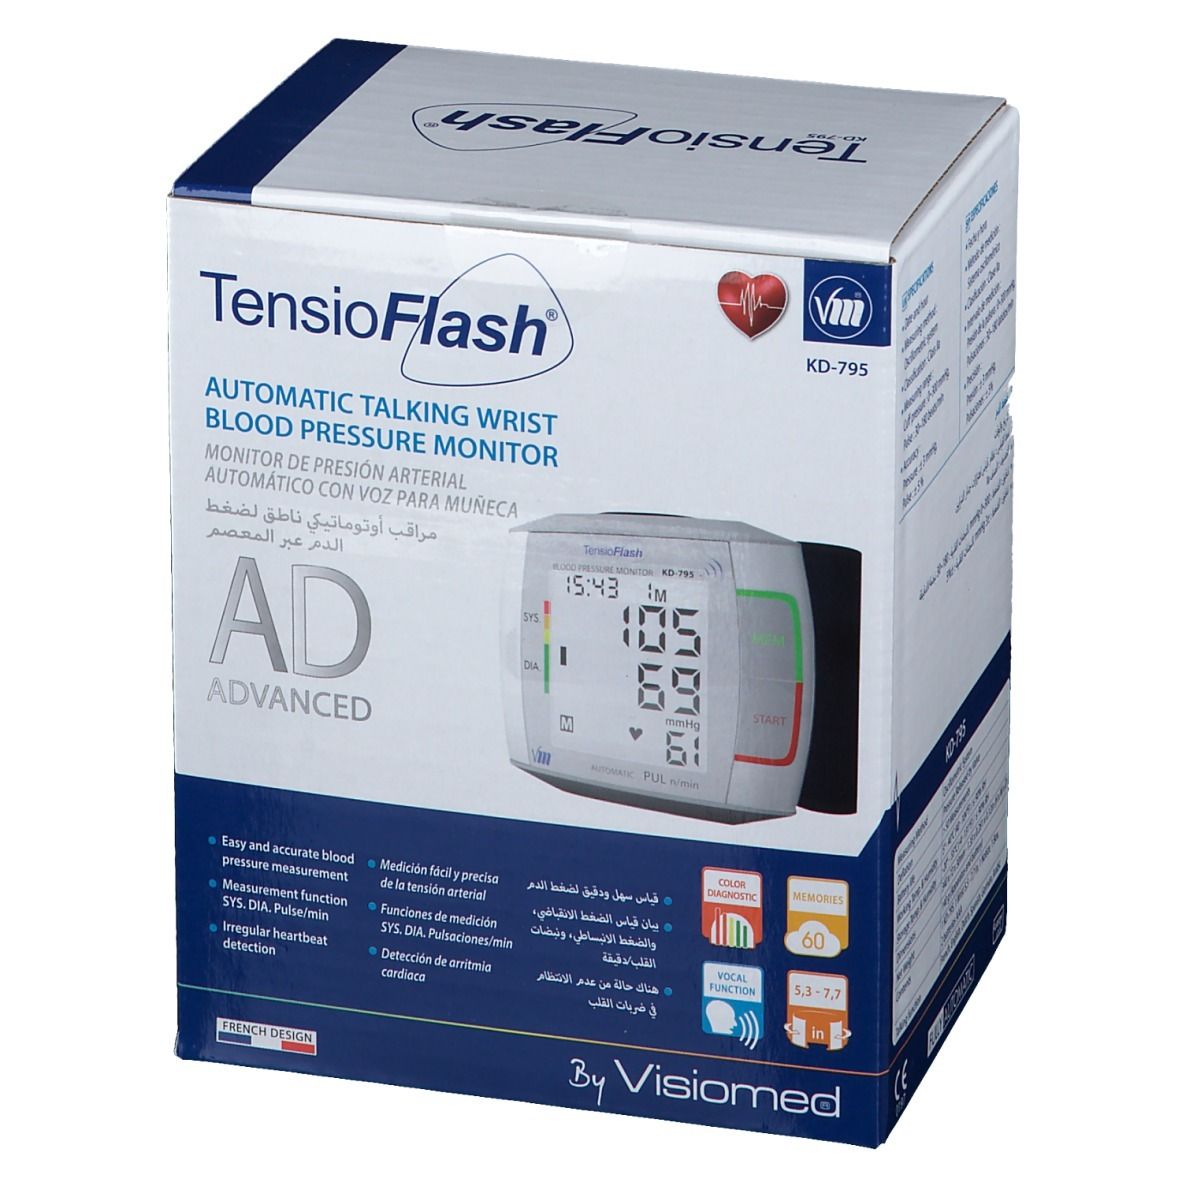 TensioFlash® AD ADVANCED Monitor de presion arterial